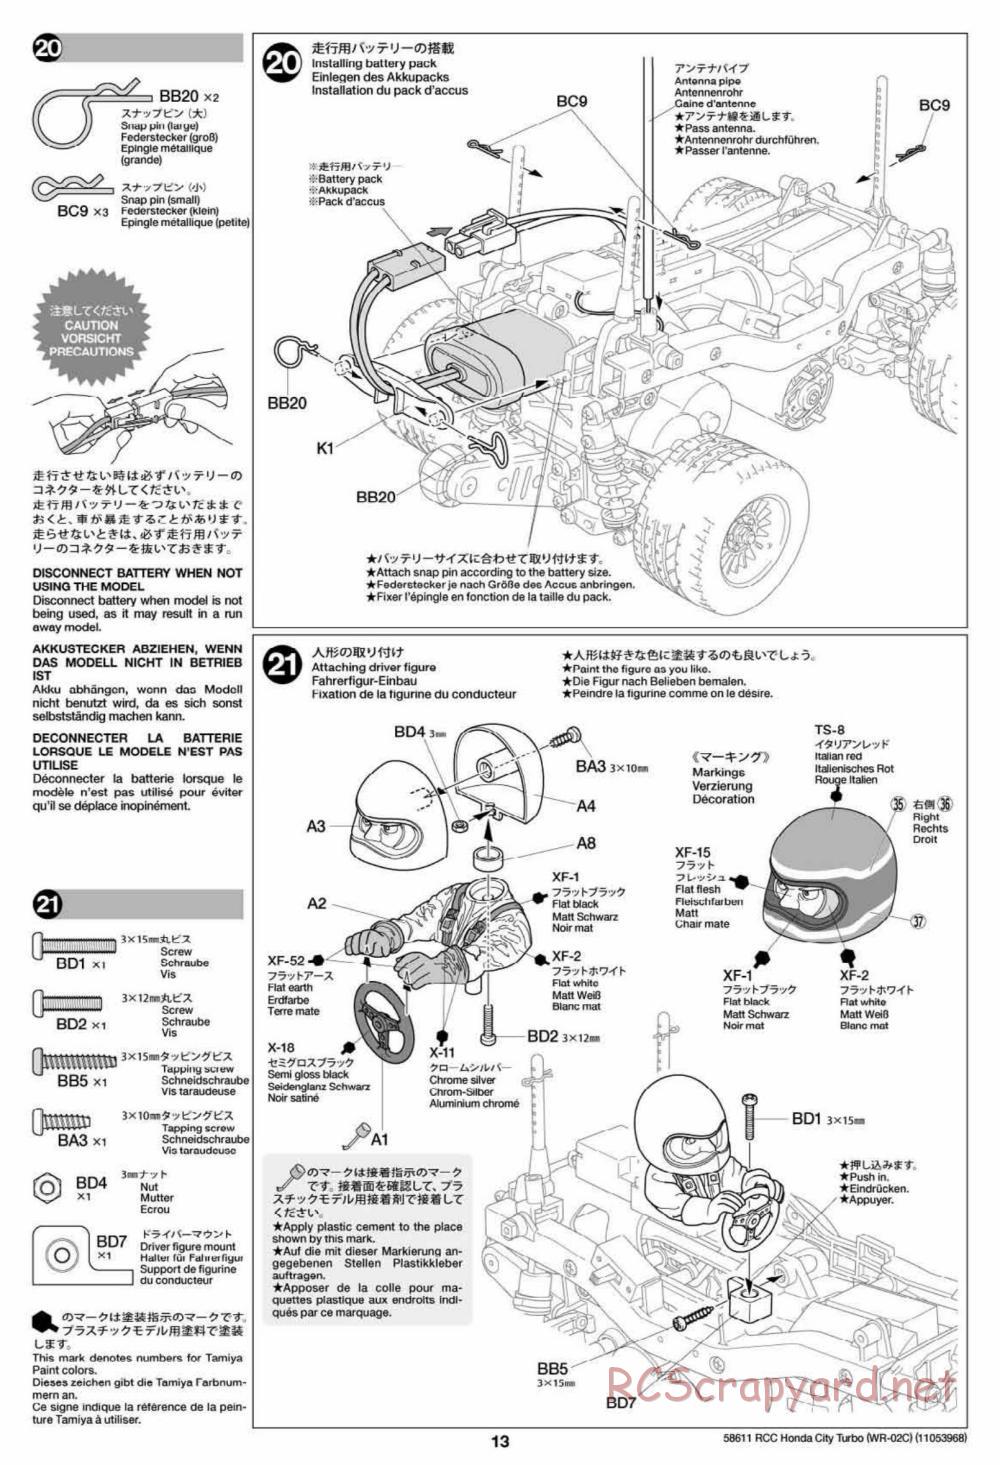 Tamiya - WR-02C Chassis - Manual - Page 13